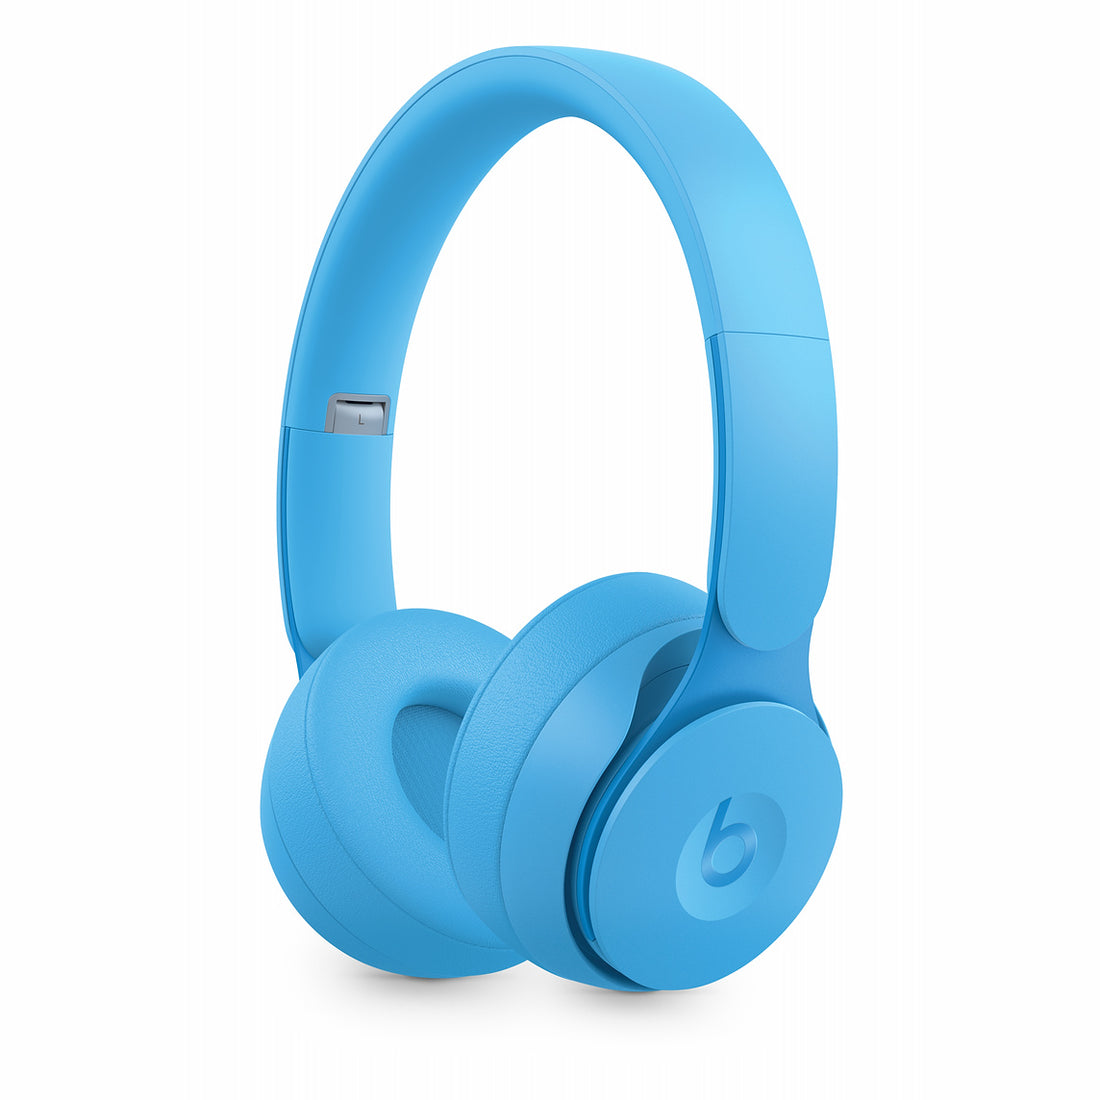 Beats Solo Pro Wireless Noise Cancelling On-Ear Headphones - Light Blue (Refurbished)